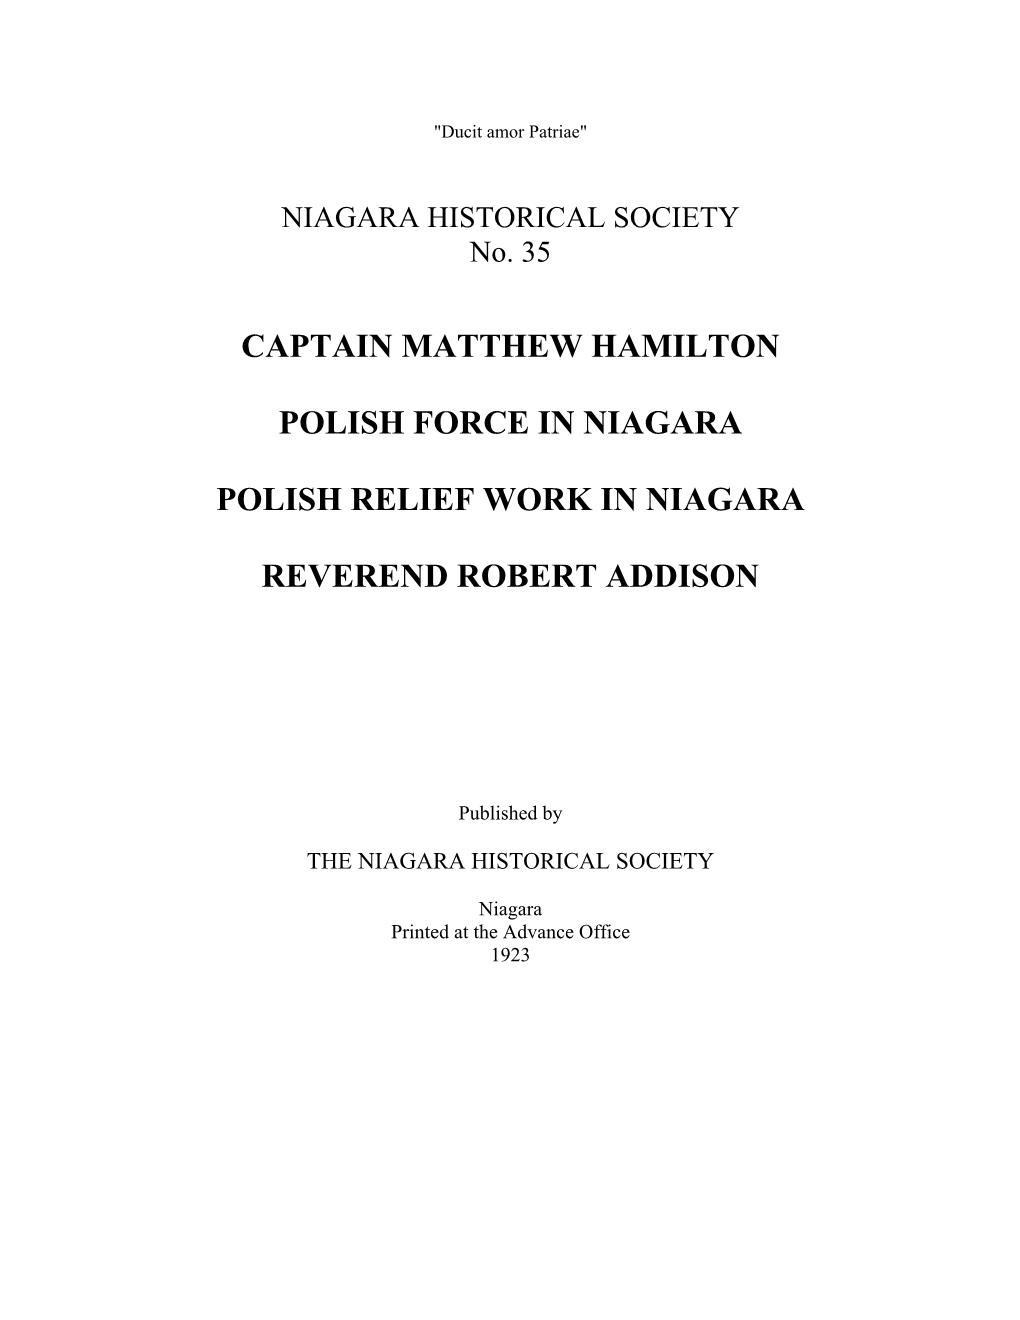 Captain Matthew Hamilton Polish Force in Niagara